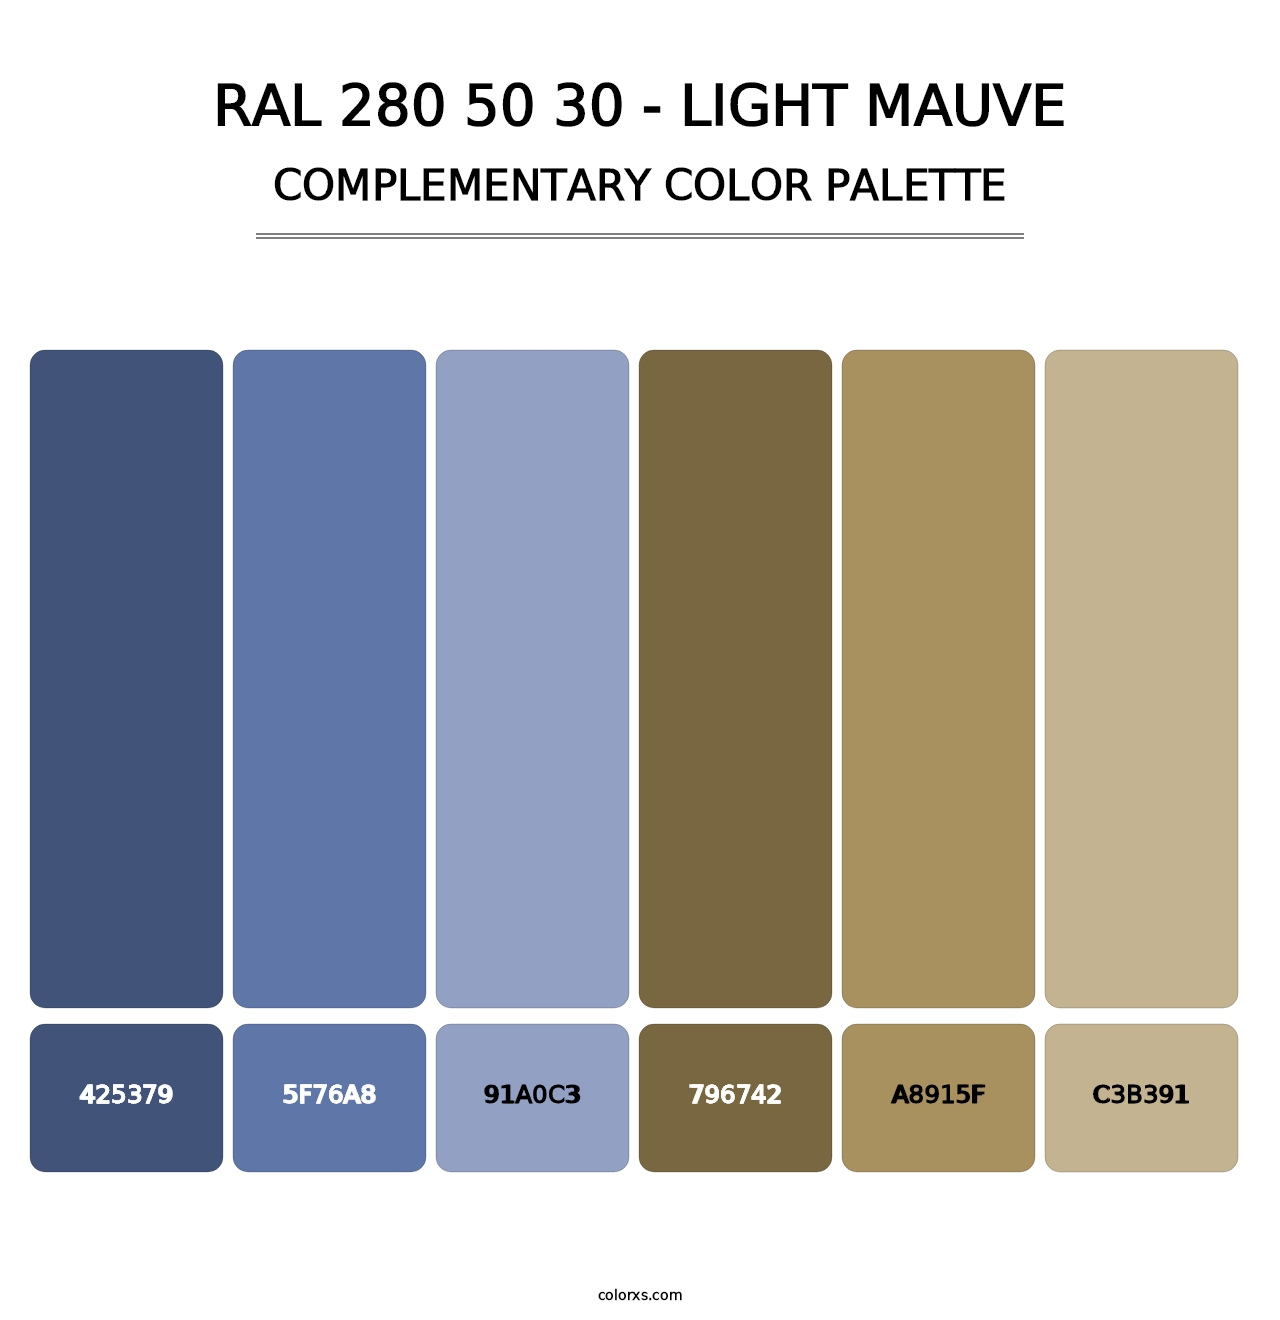 RAL 280 50 30 - Light Mauve - Complementary Color Palette